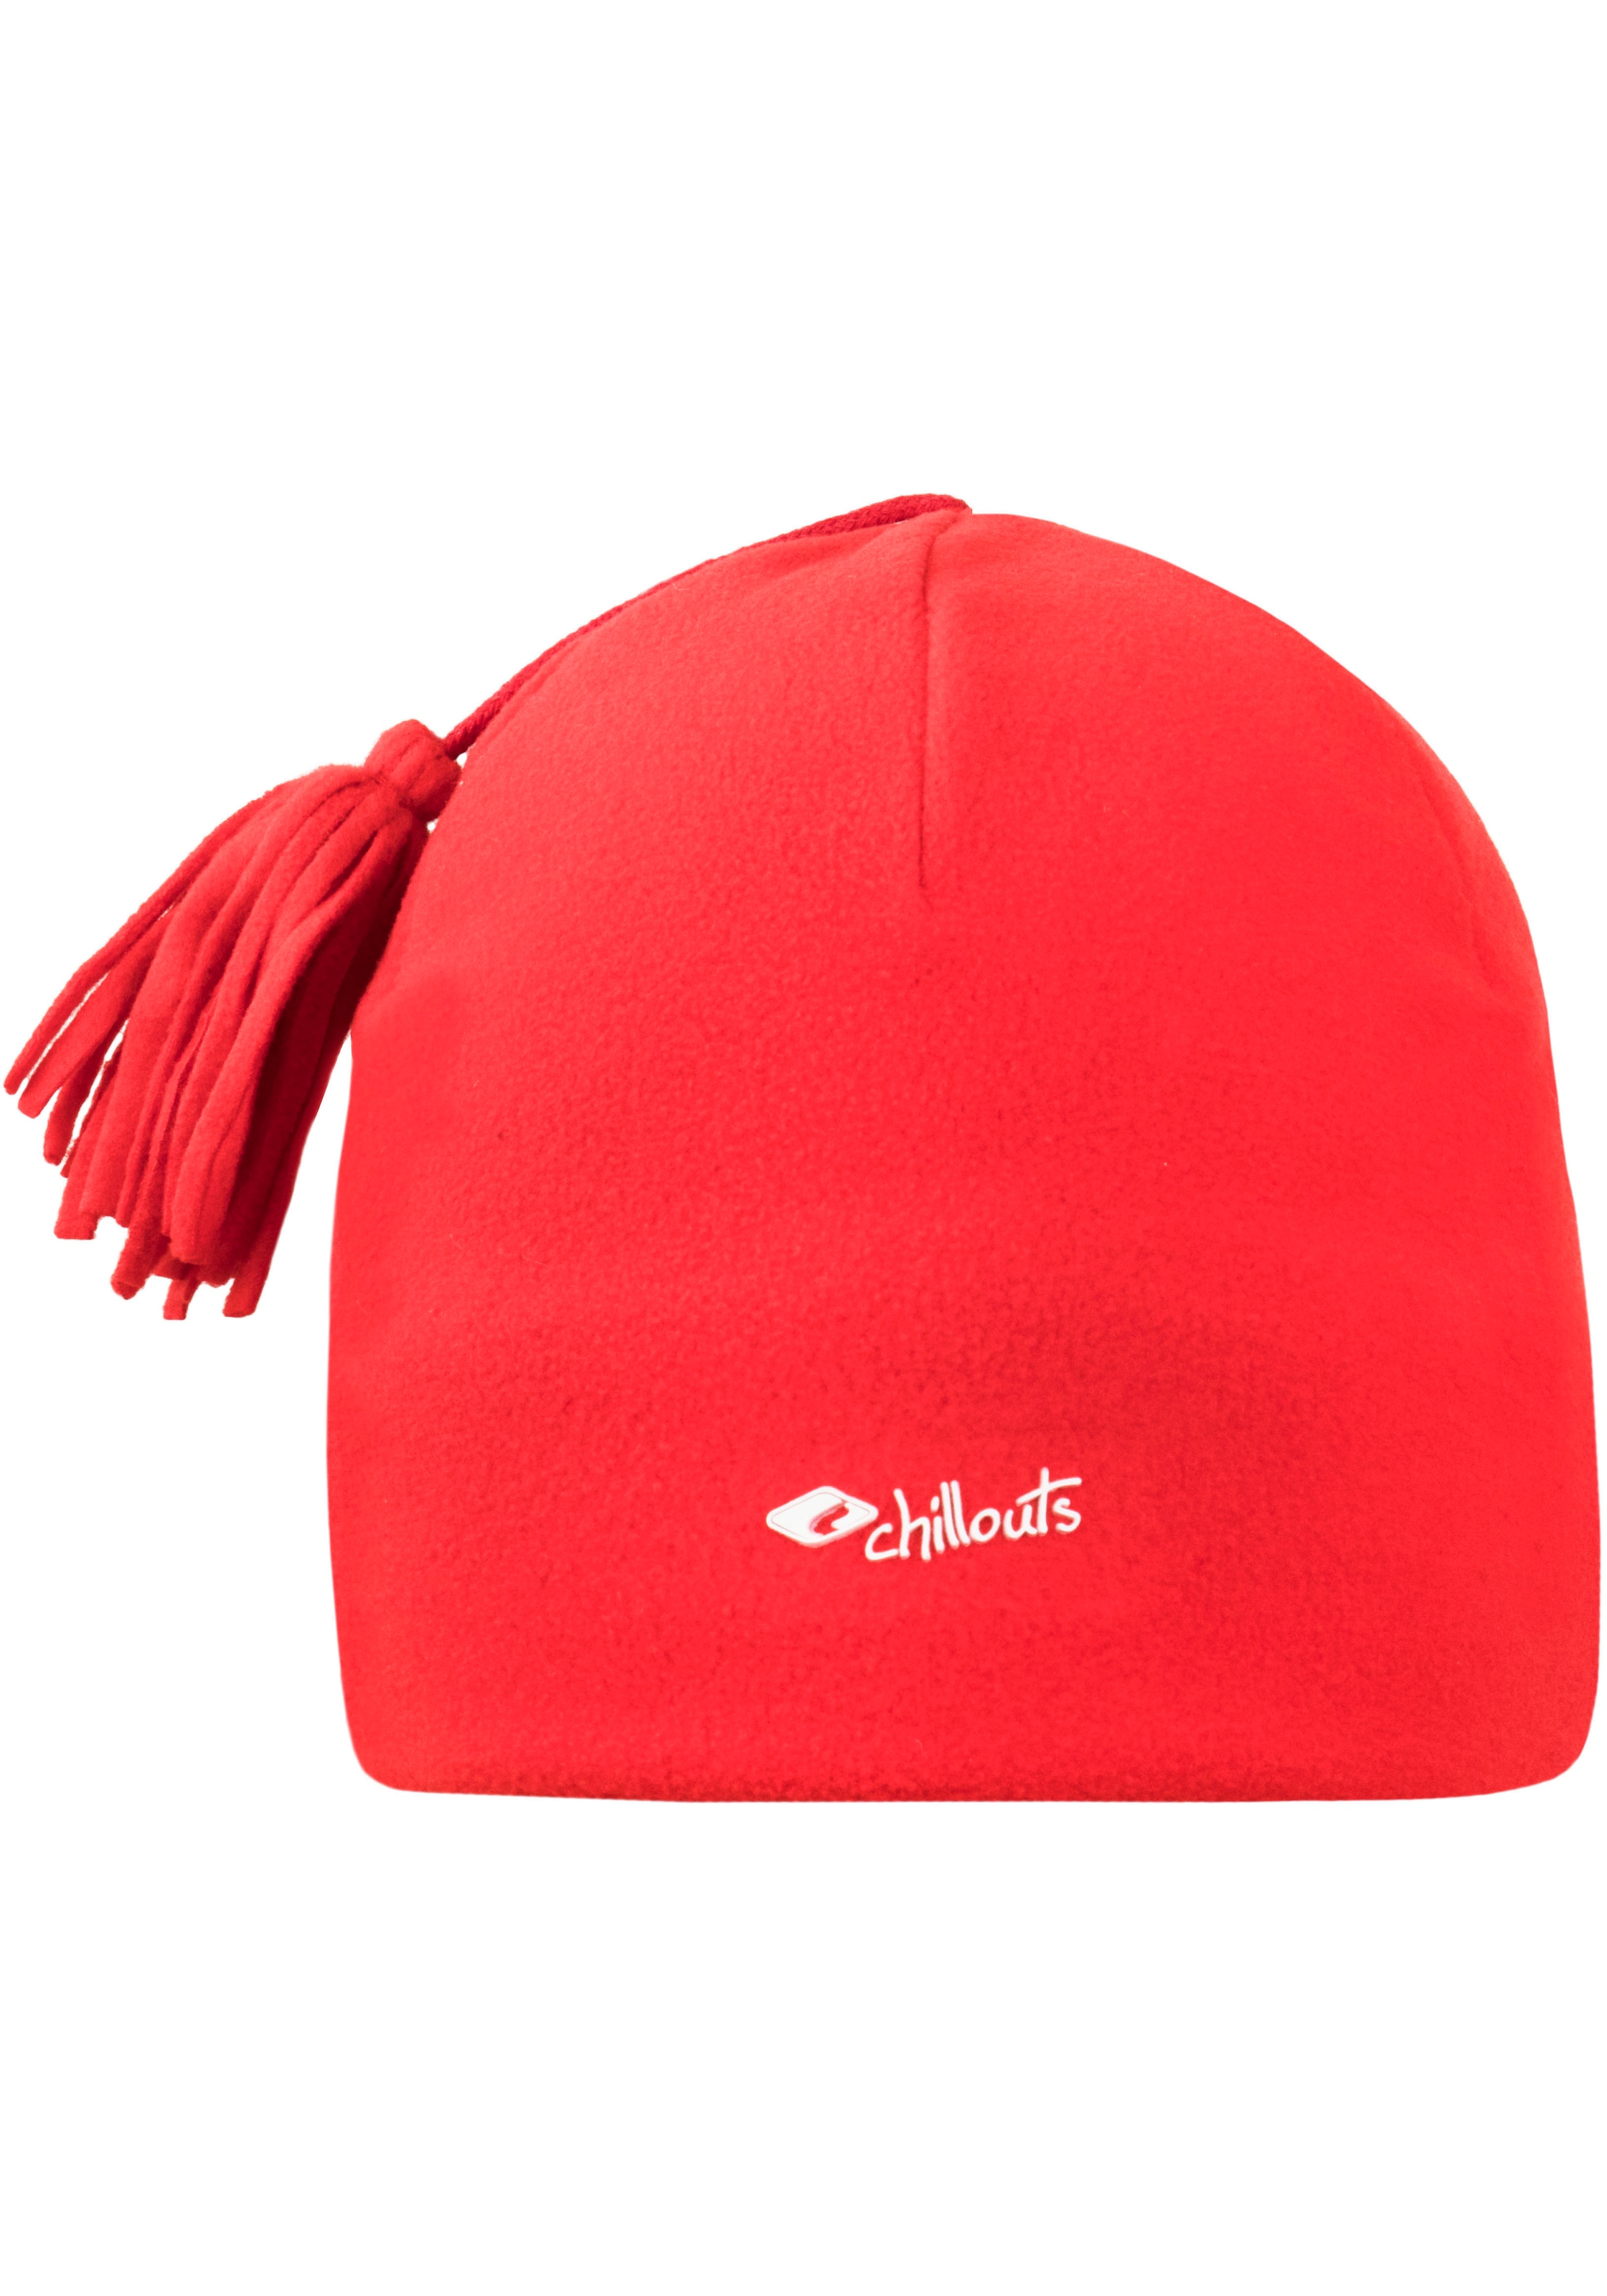 chillouts Fleecemütze, Freeze Fleece Pom Hat online kaufen | BAUR